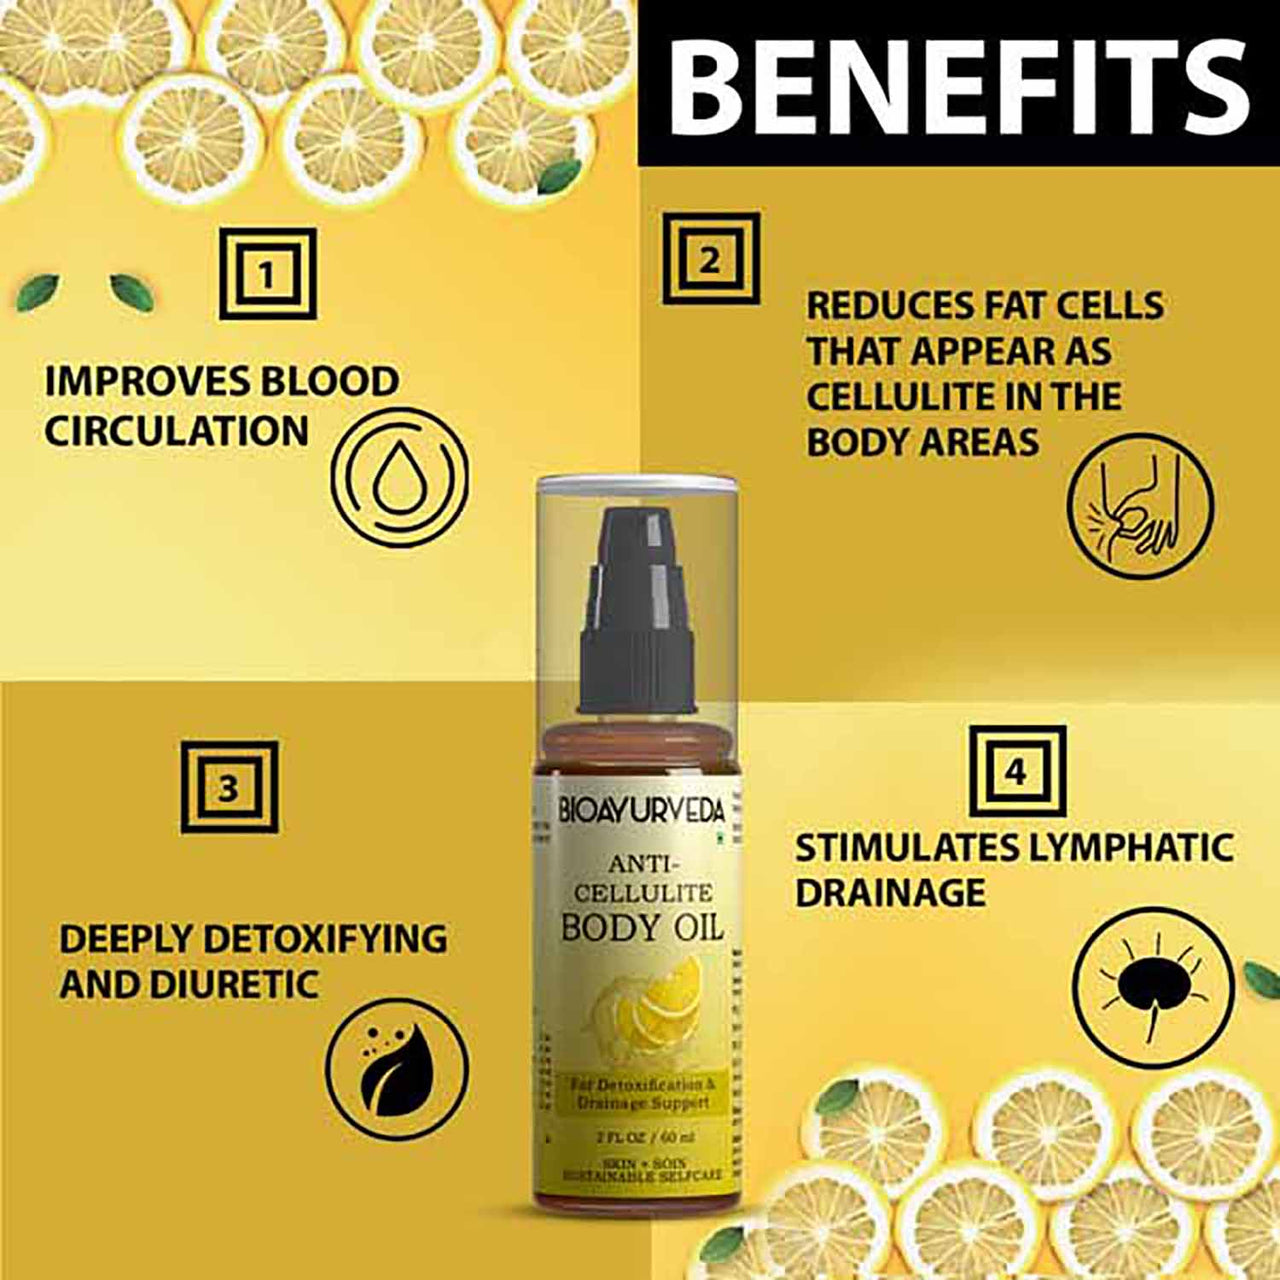 Anti-Cellulite Body Oil Benefits